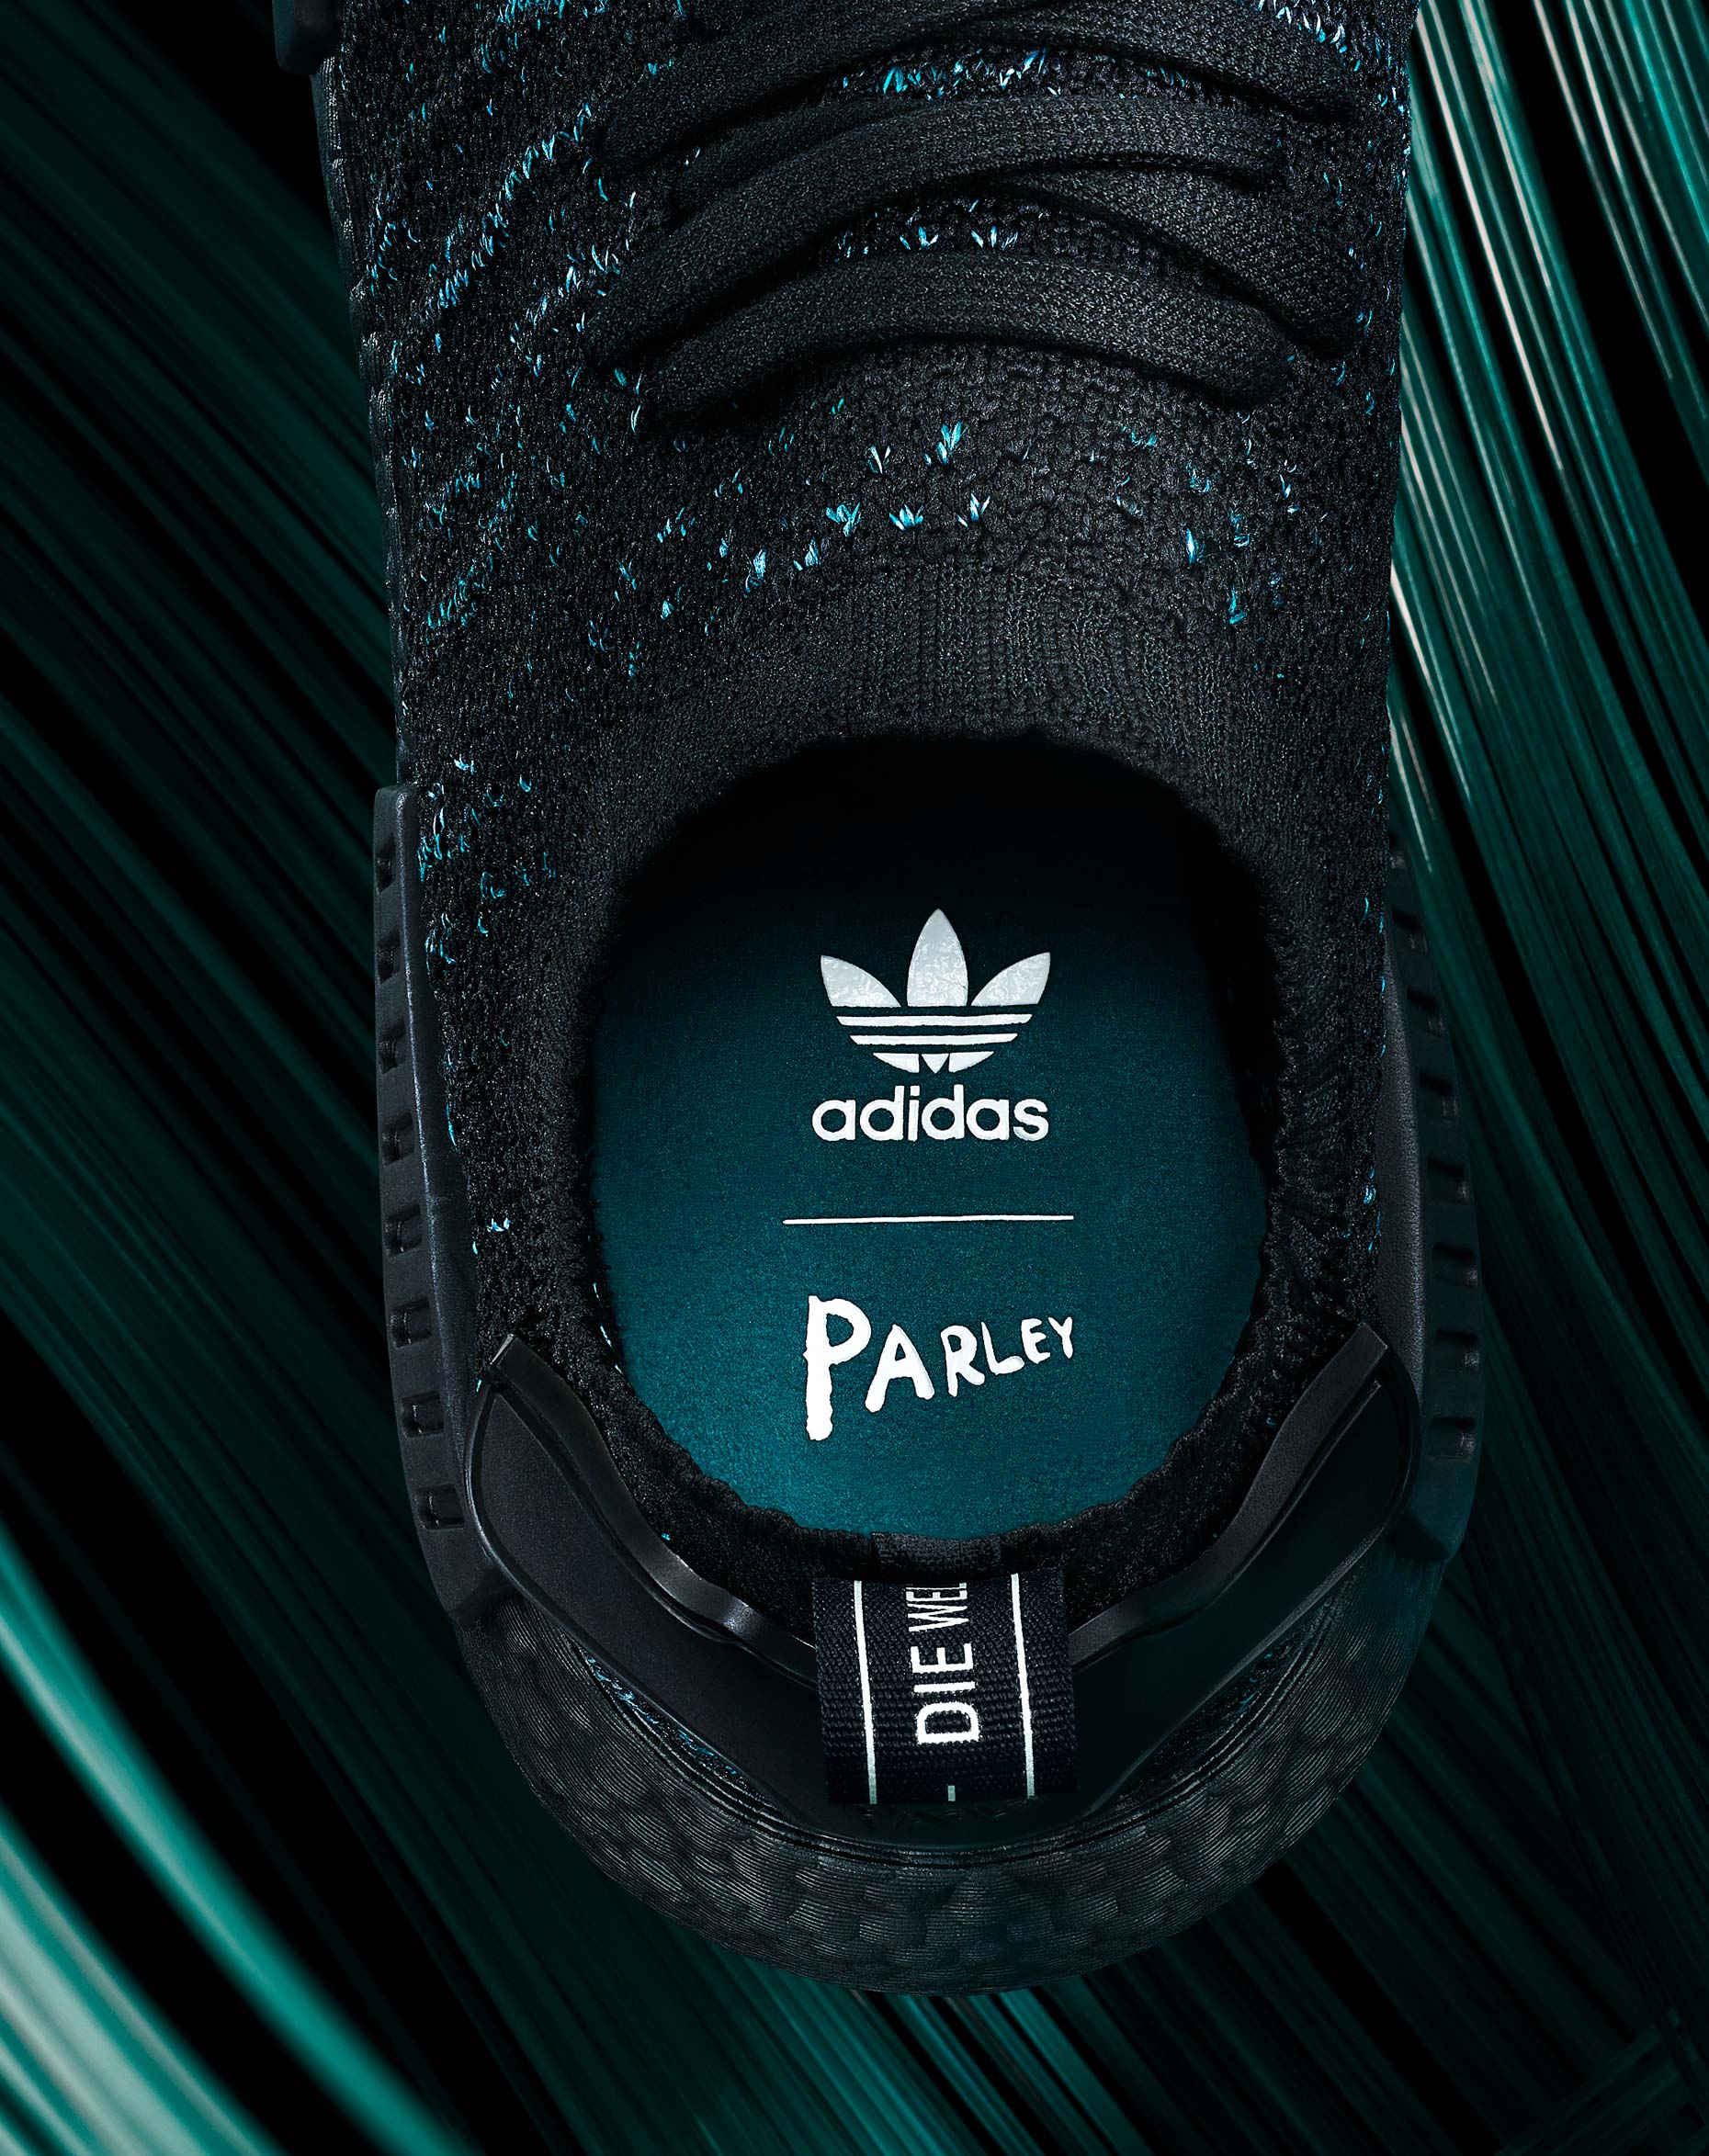 _Adidas_2018_Parley_Detail04